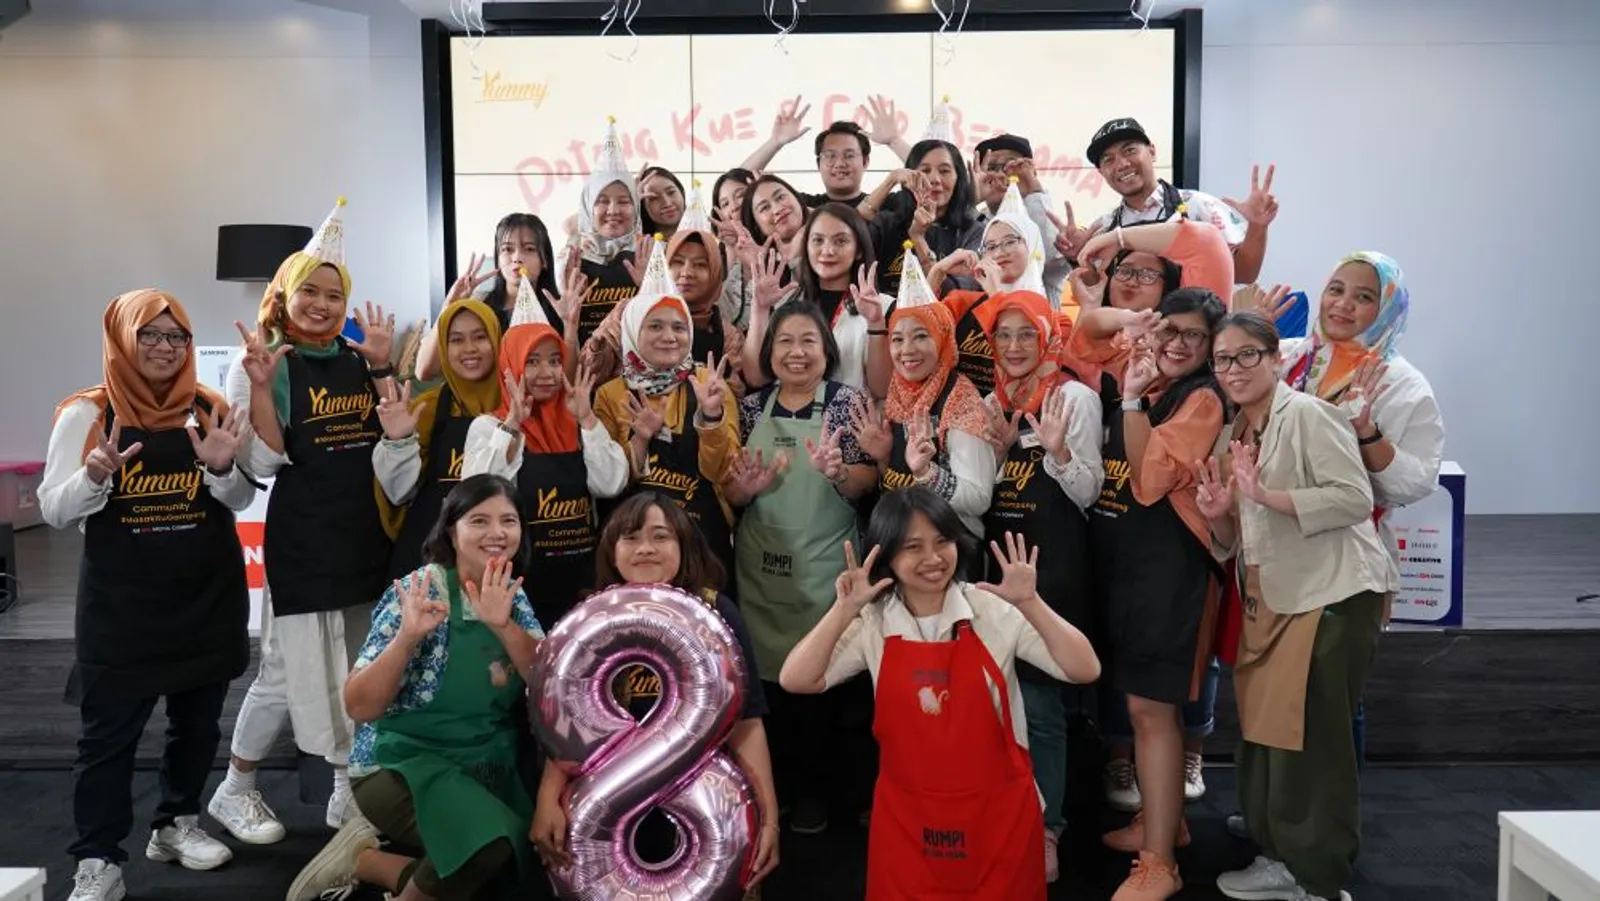 Yummy Rayakan Anniversary ke-8 Bersama Komunitasnya, Seru Banget!